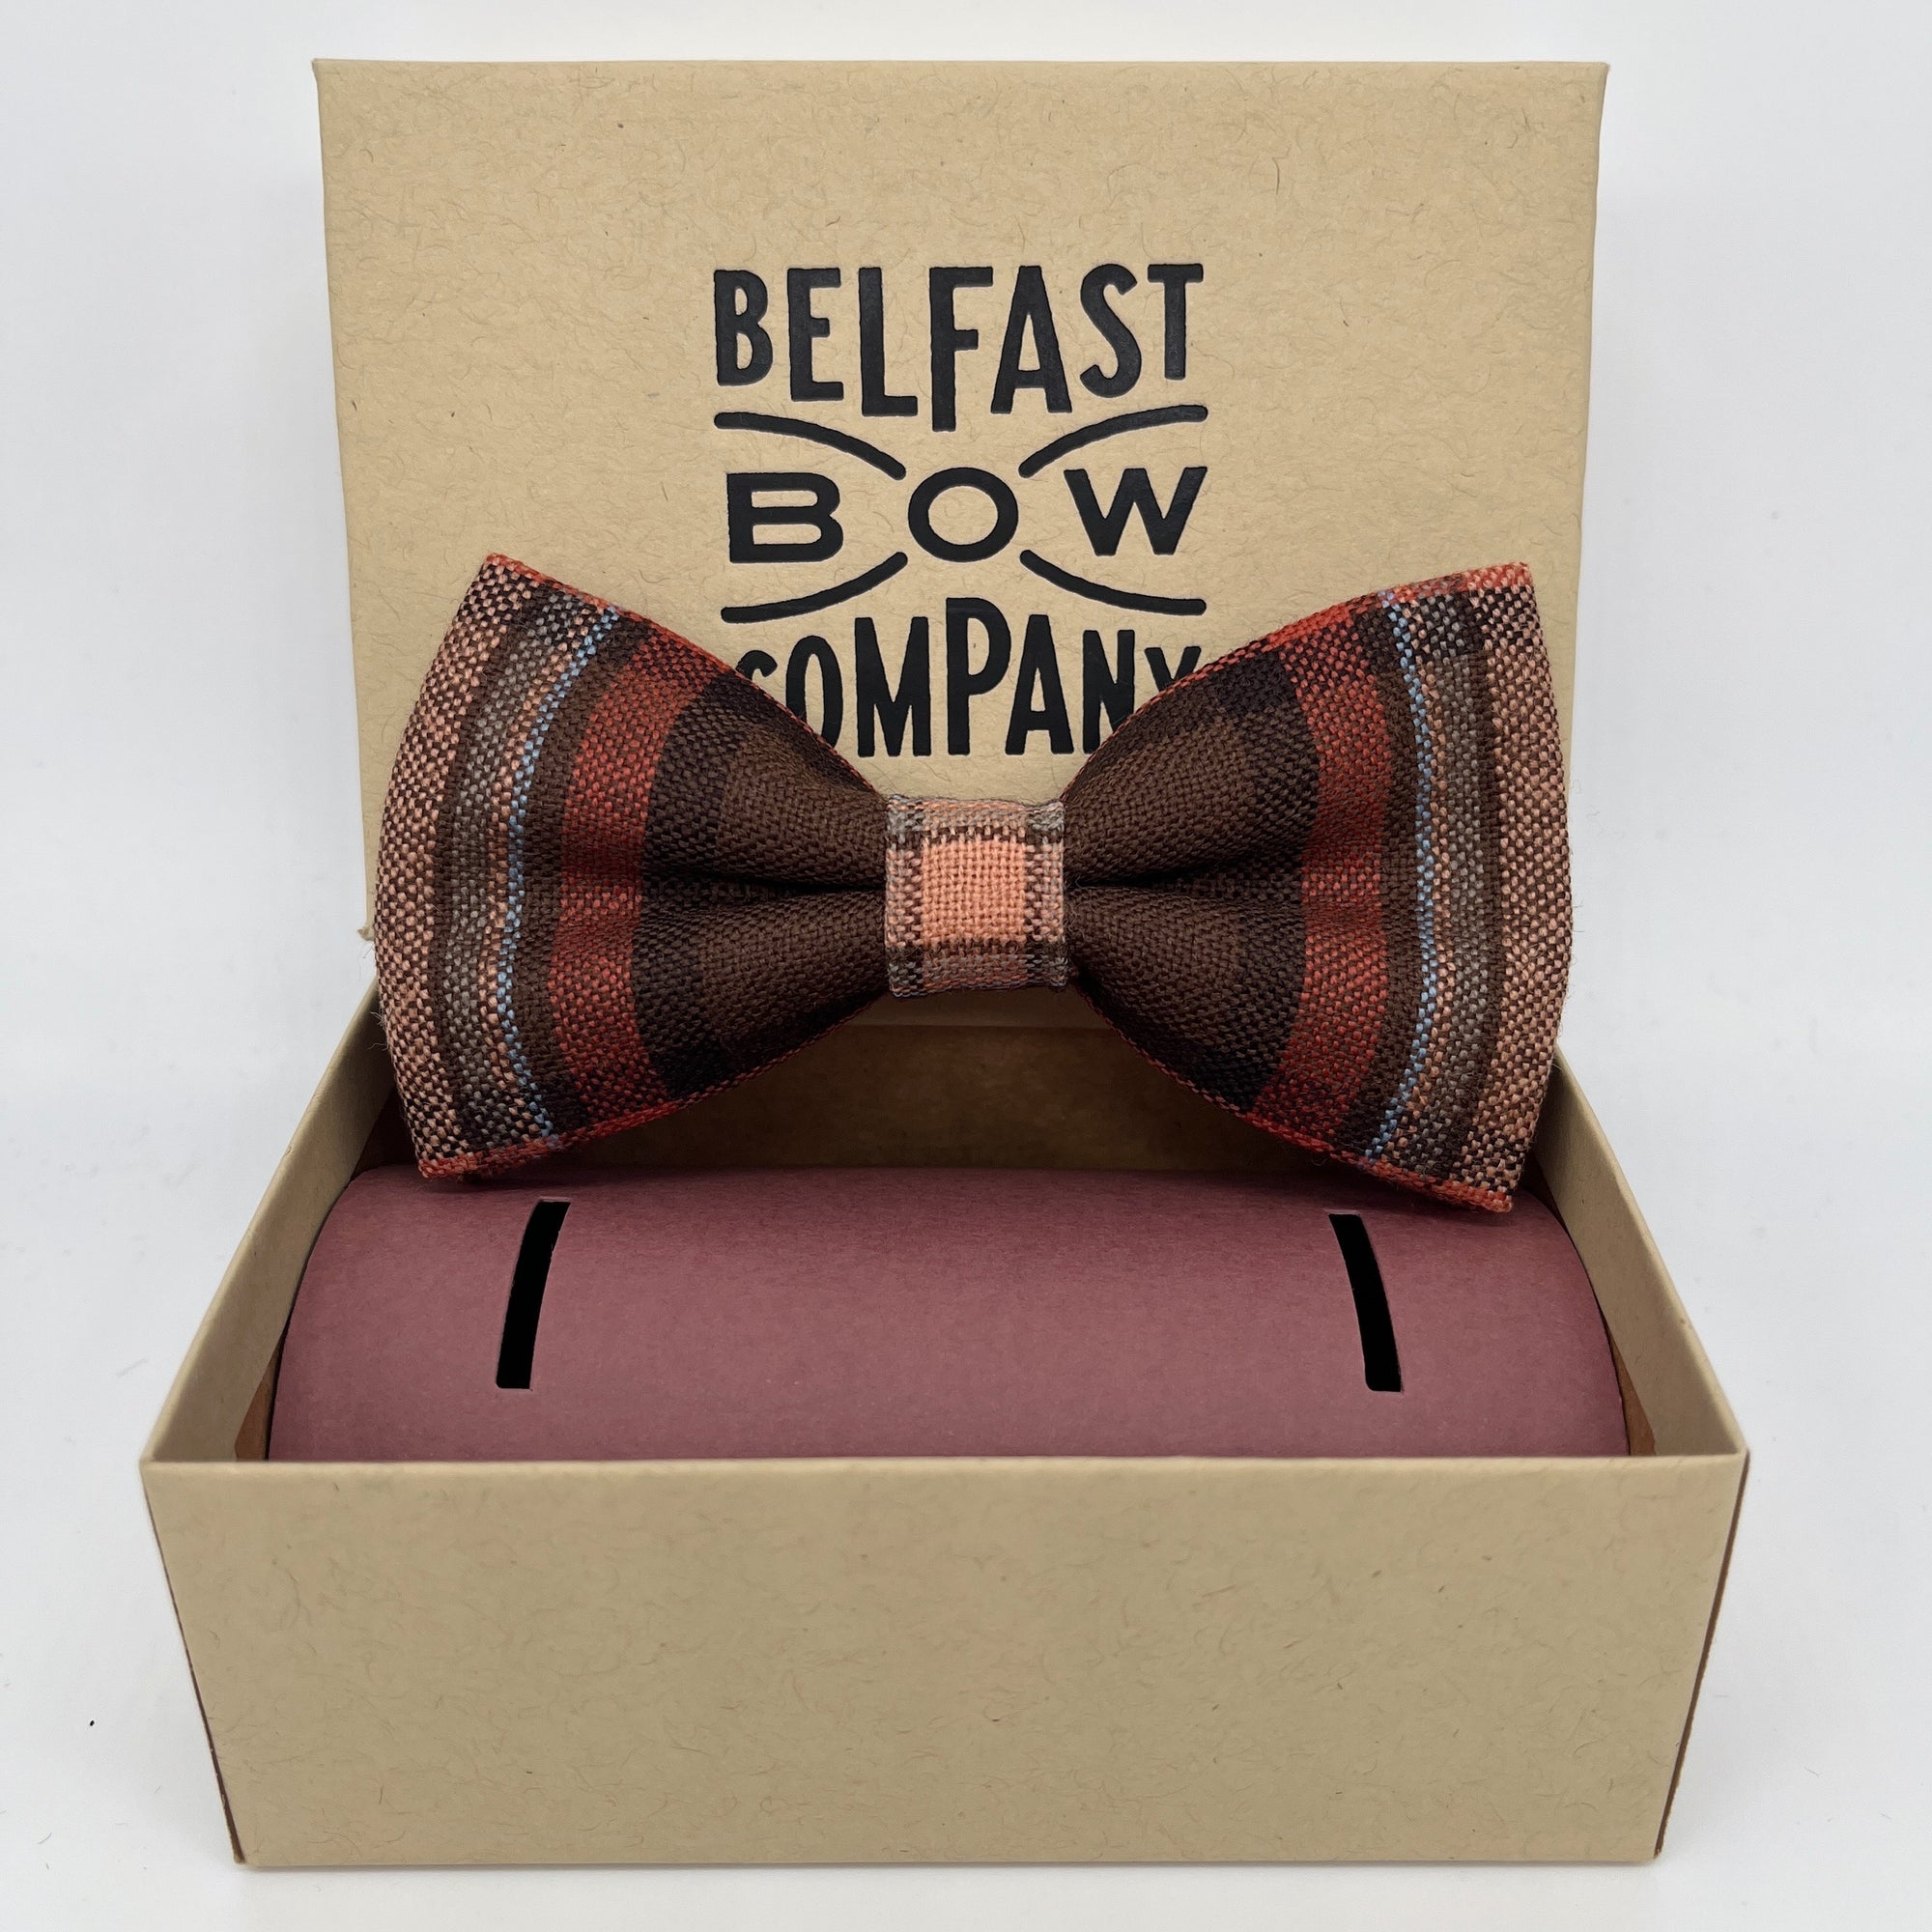 County Down Tartan Dickie Bow Tie by the Belfast Bow Company